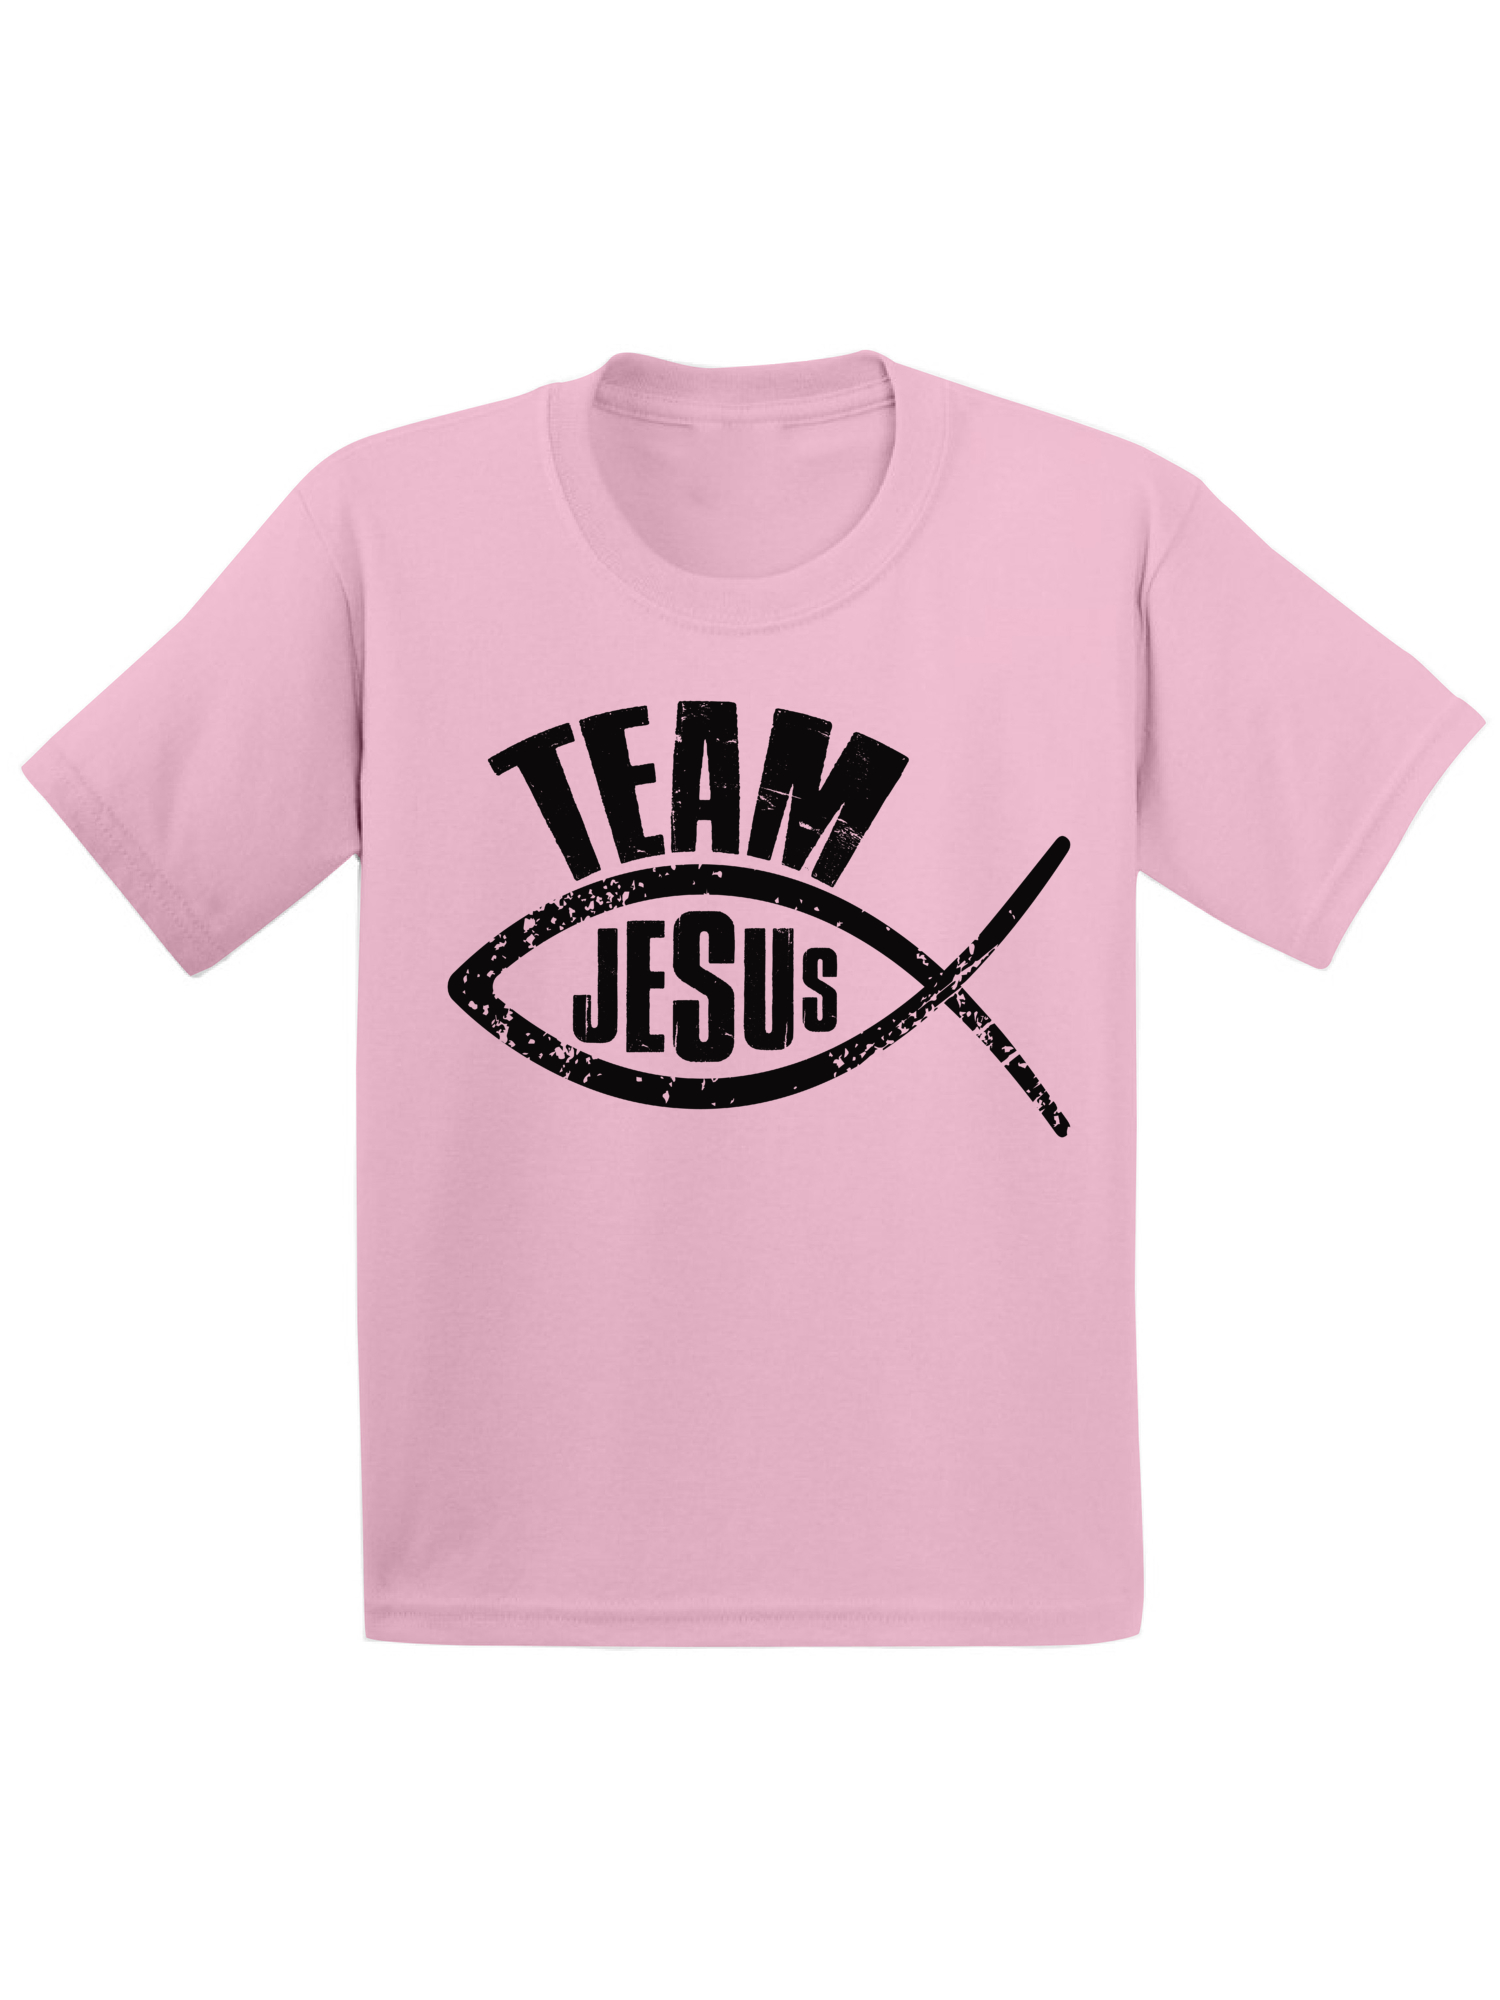 Awkward Styles Team Jesus Infant T-Shirt Team Shirt Dominican Republic